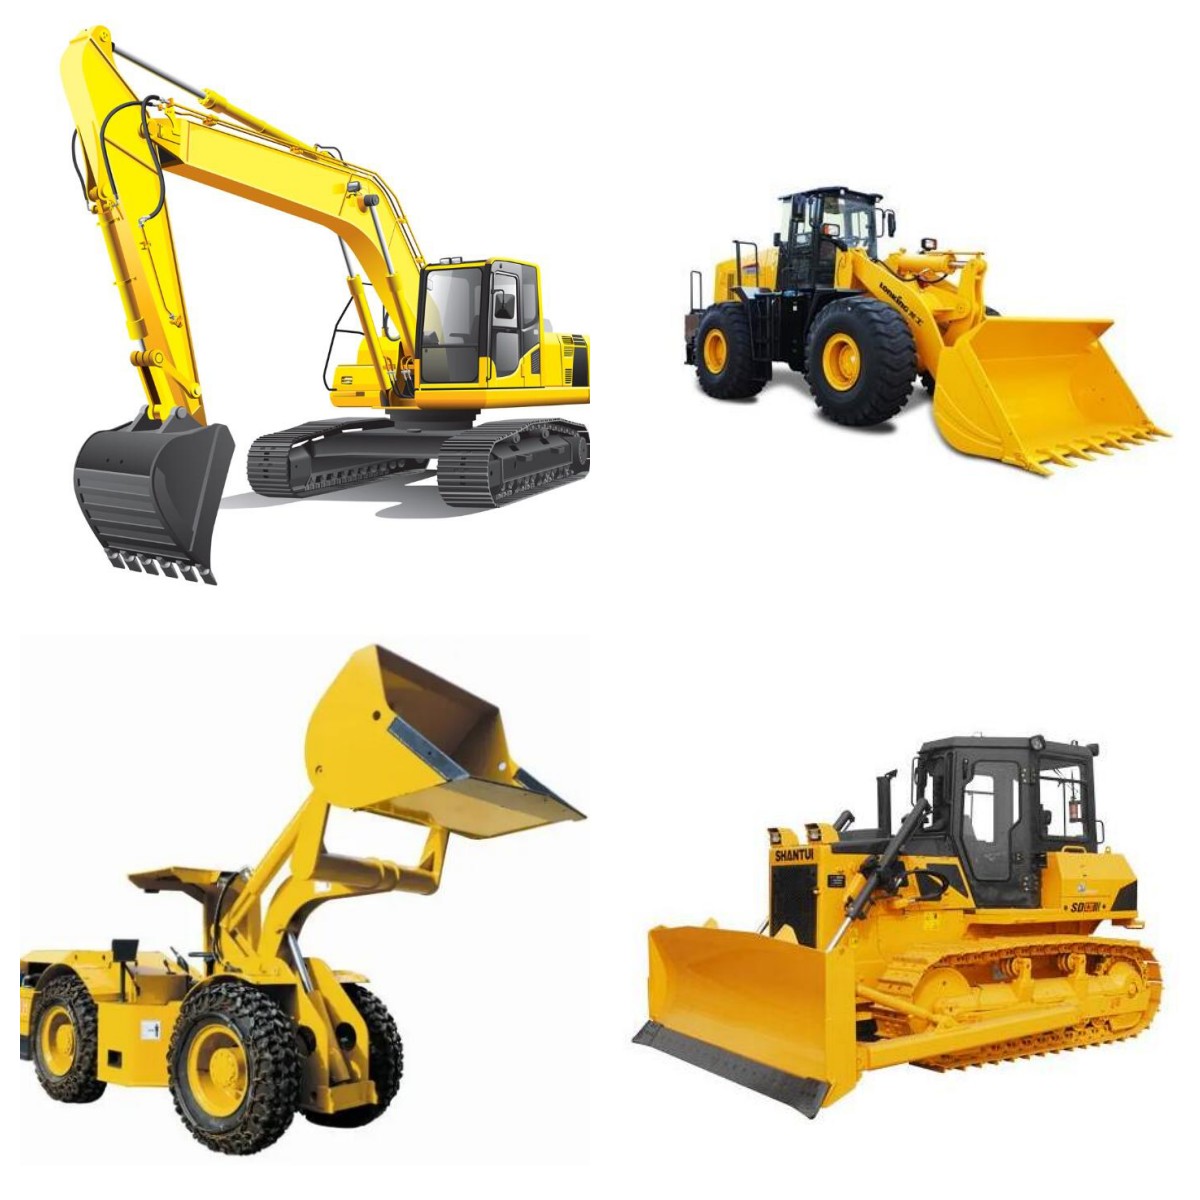 Difference between scraper, loader, bulldozer and excavator